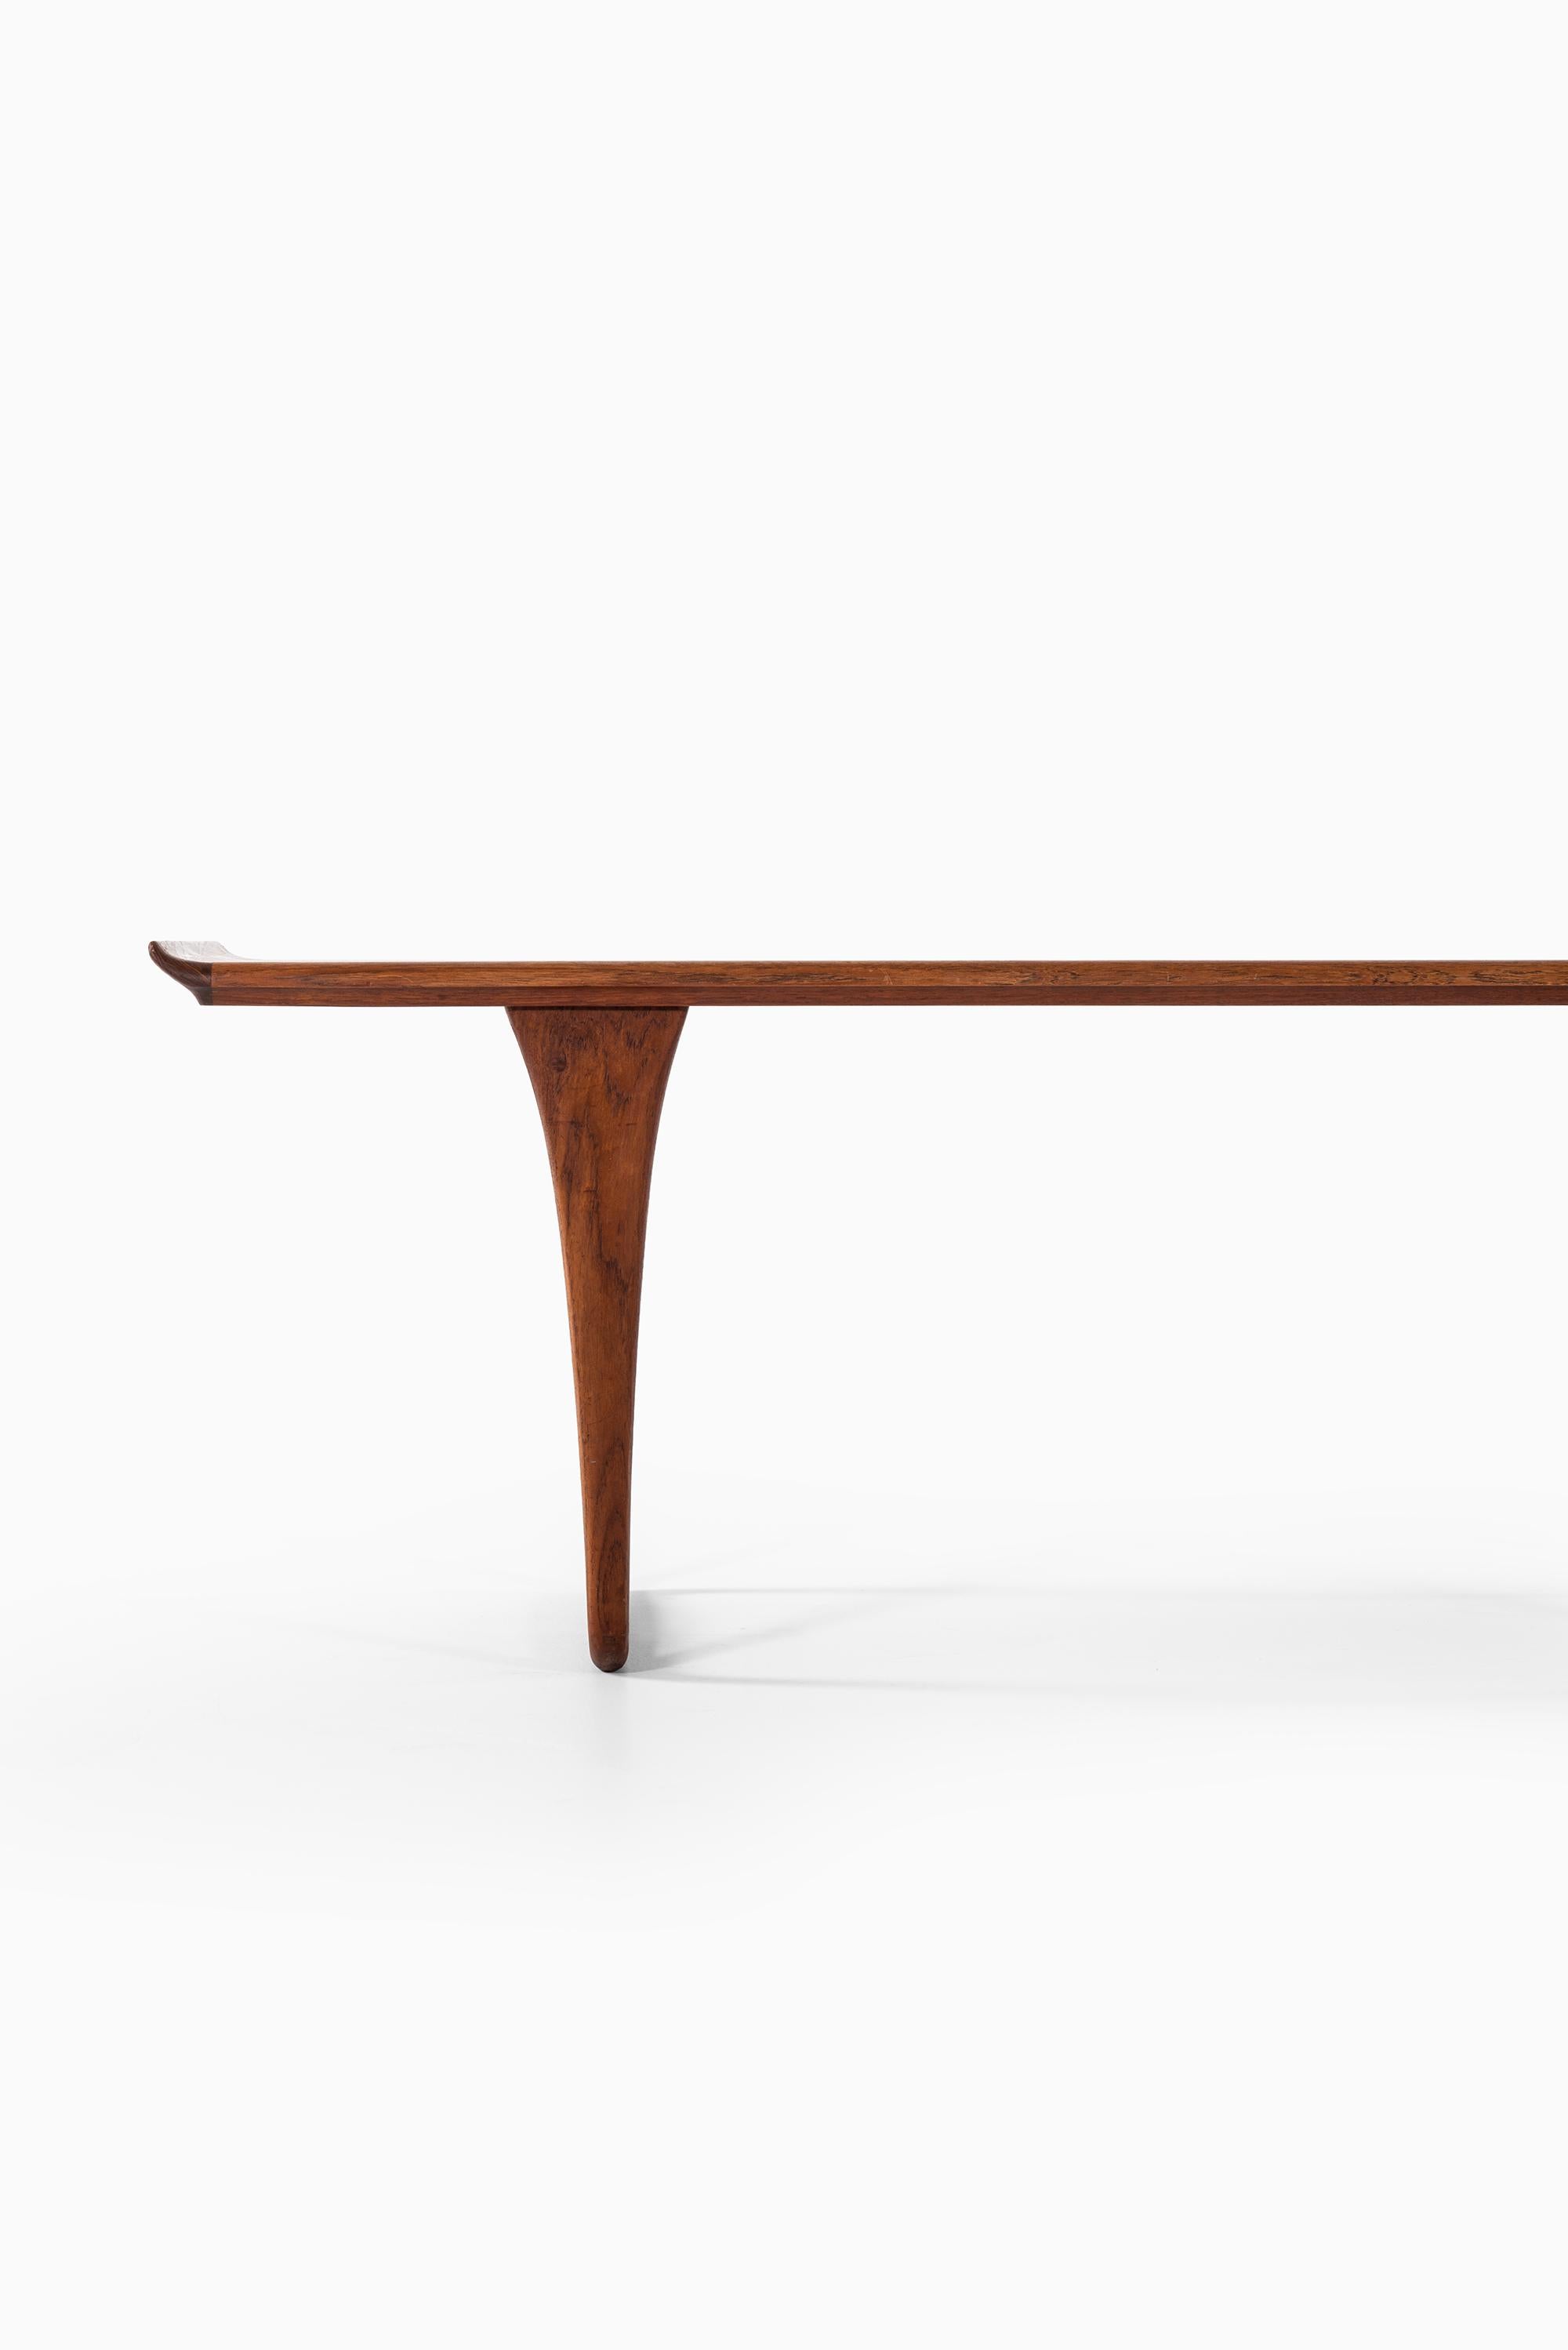 Coffee table designed by Svante Skogh. Produced by Seffle Möbelfabrik in Sweden.